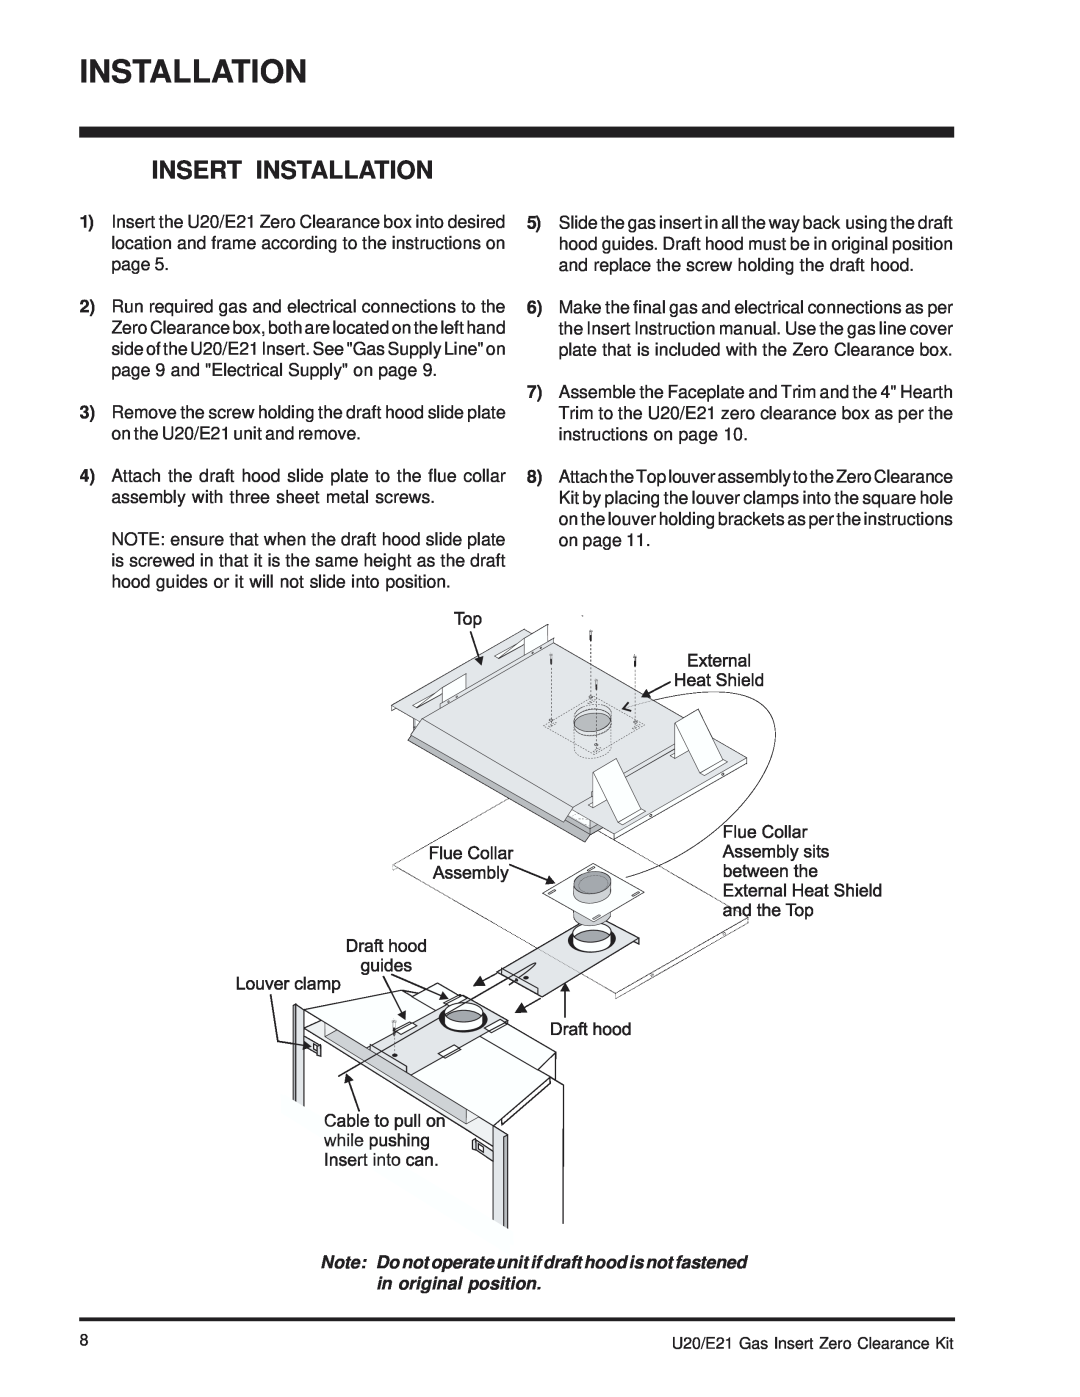 Regency installation manual Insert Installation, U20/E21 Gas Insert Zero Clearance Kit 